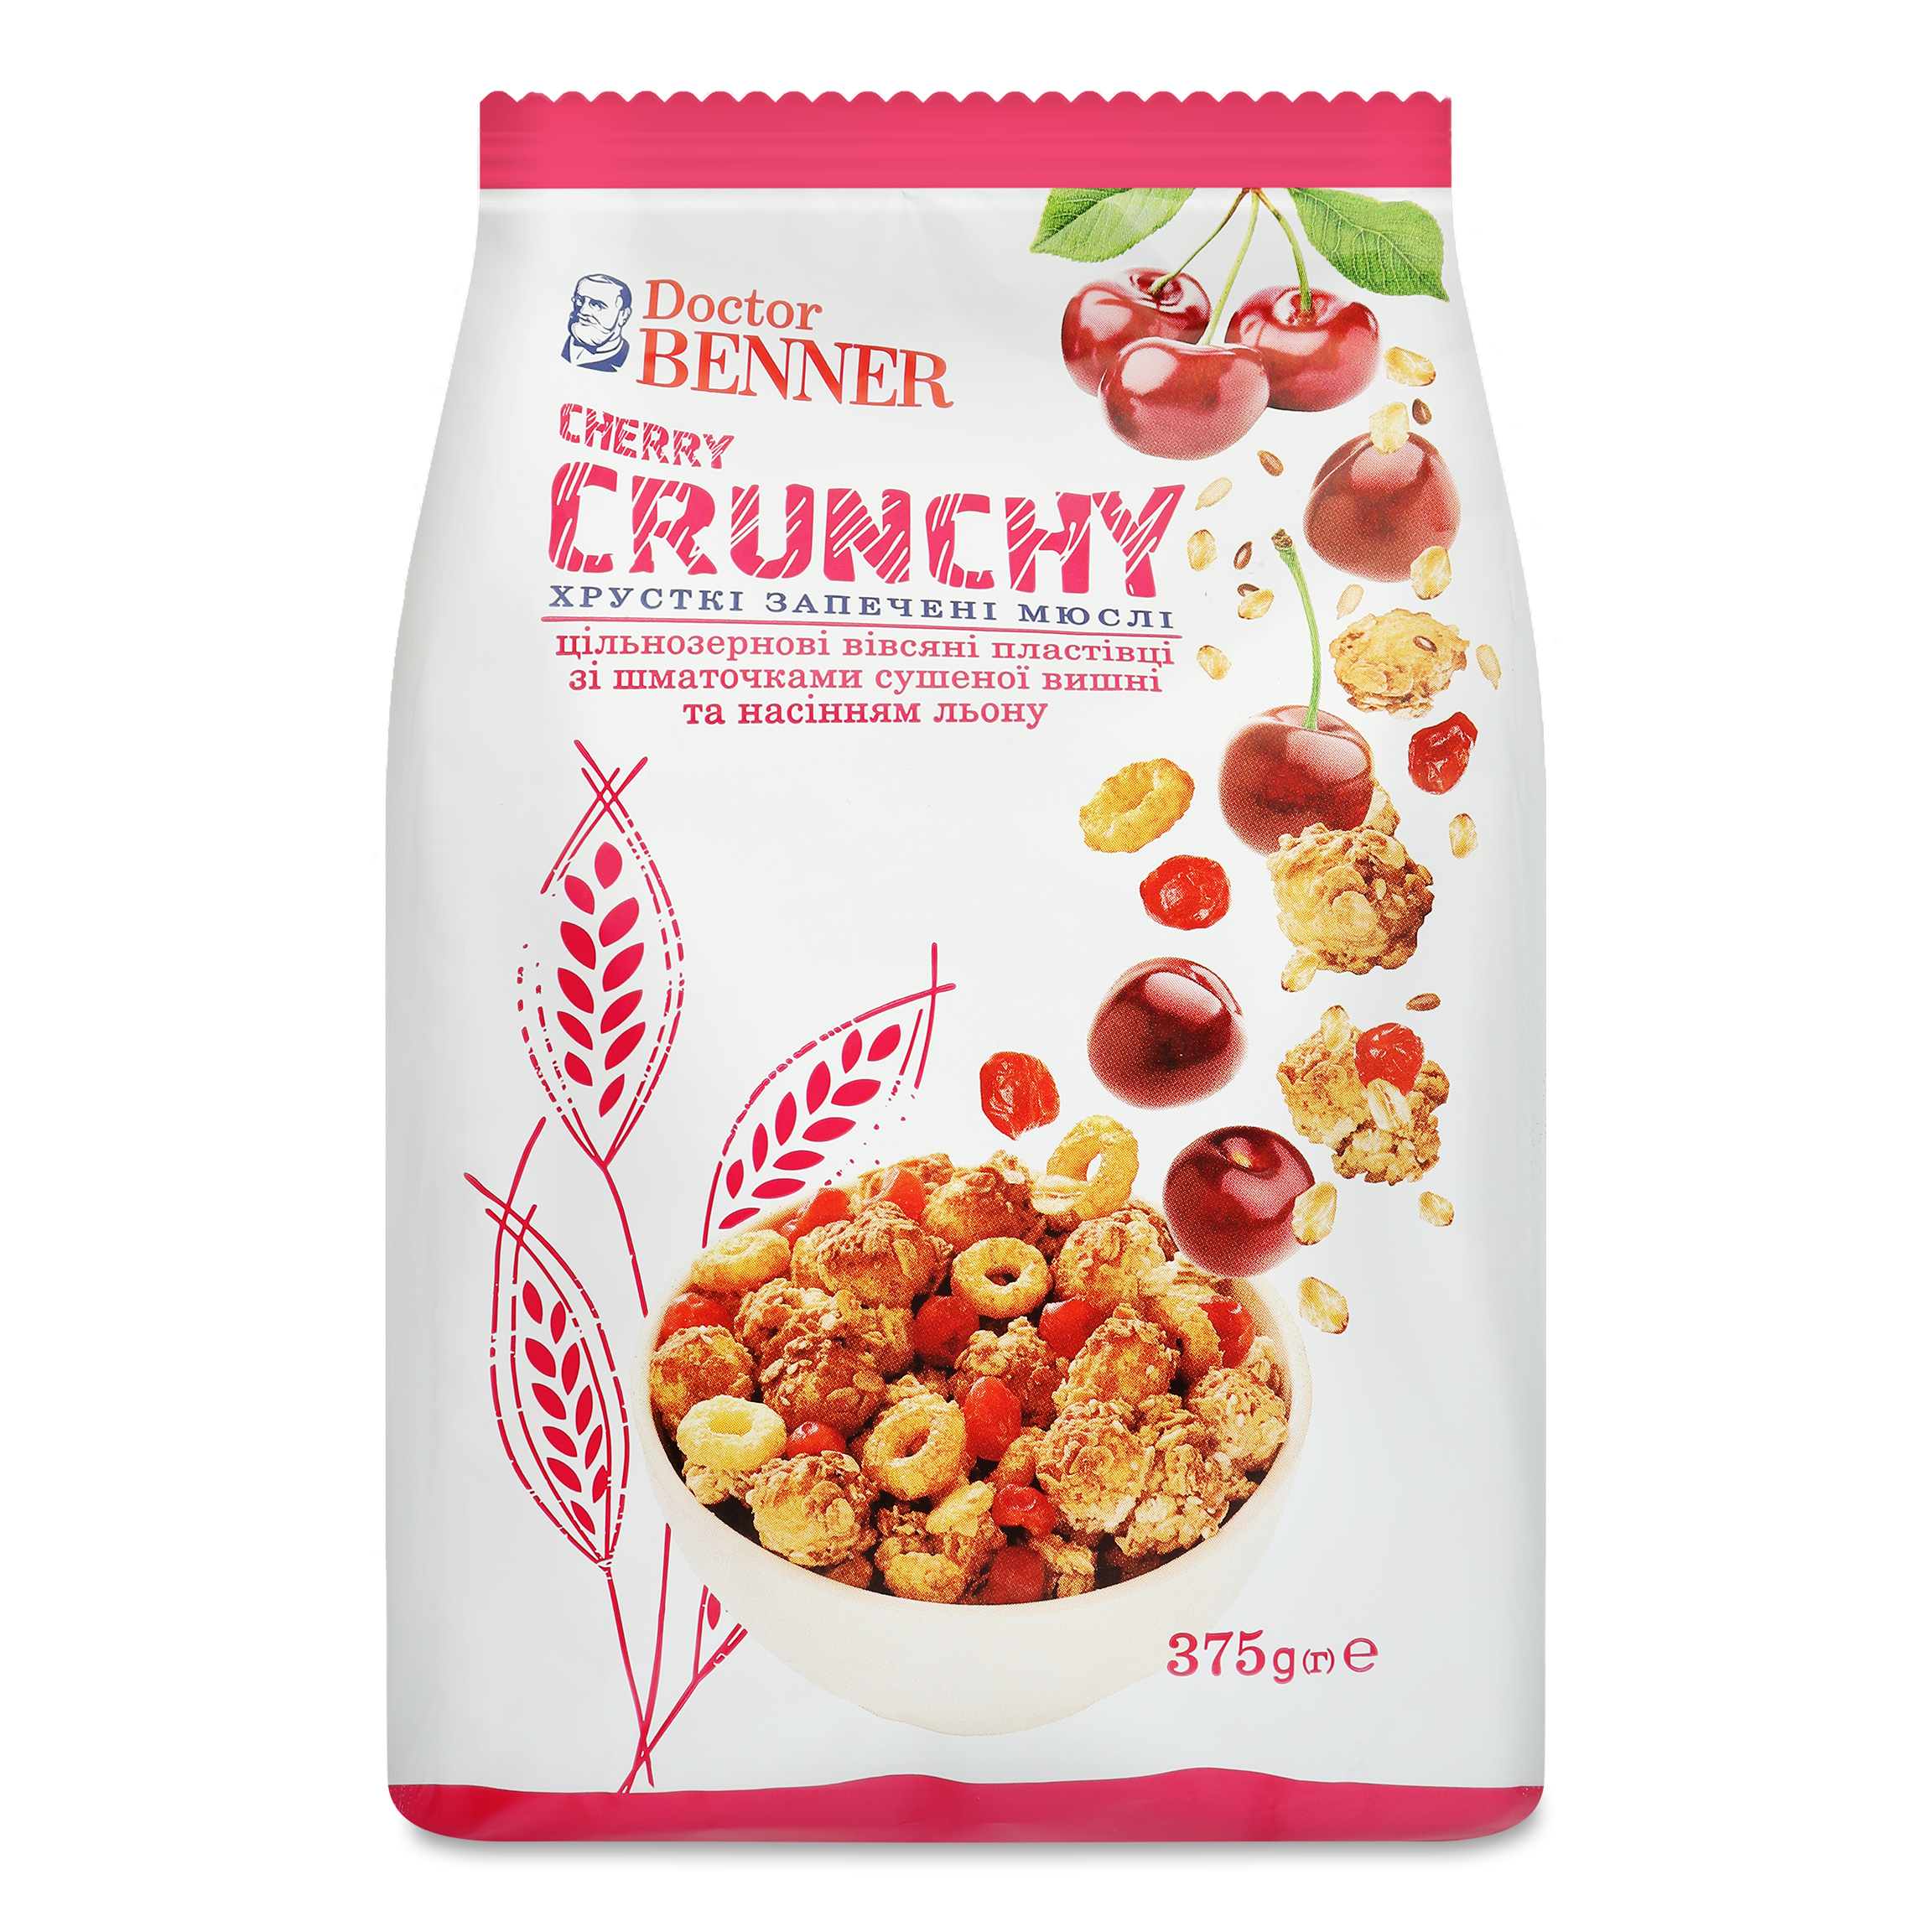 Doctor Benner Crunch cherry 375g